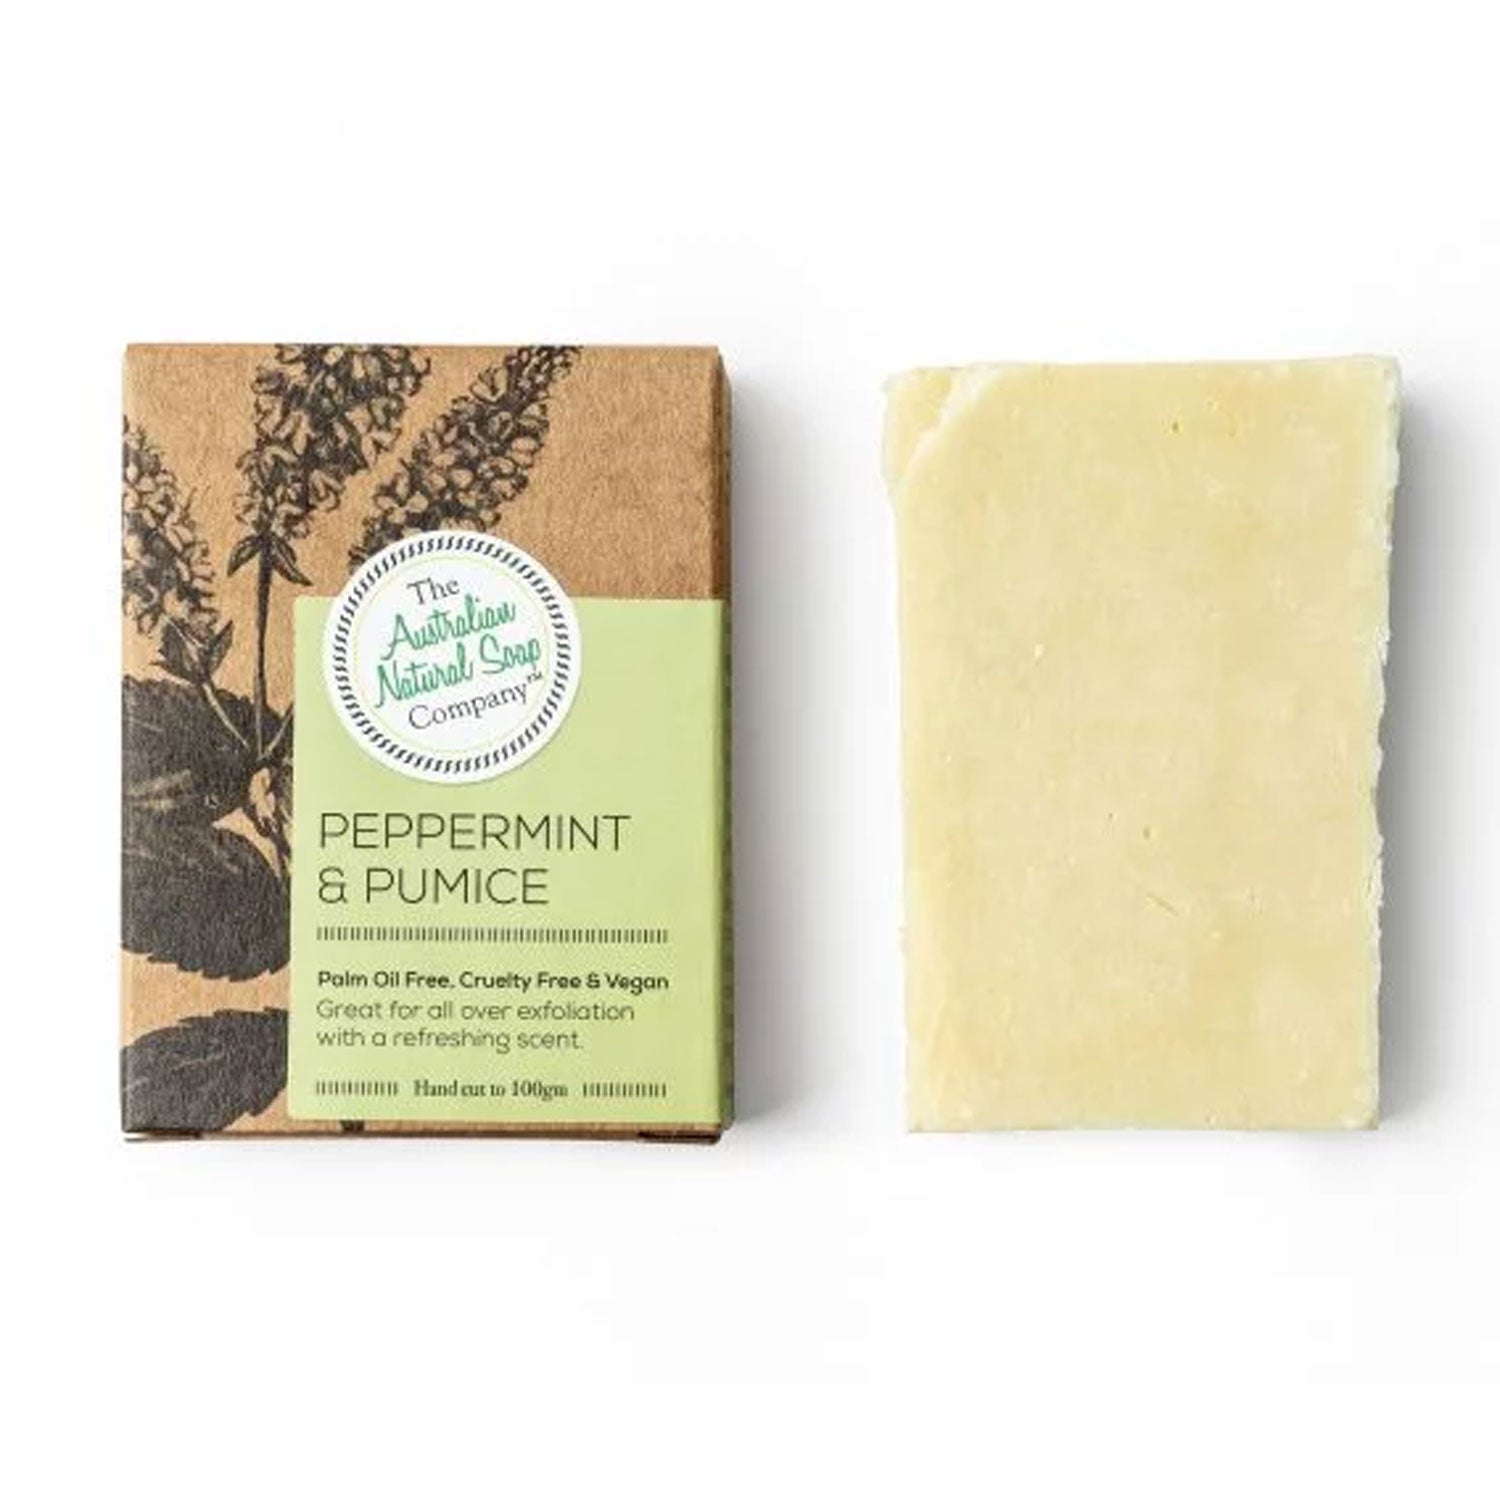 Australian Natural Soap Co - Peppermint & Pumice Soap 100g - Orcadia